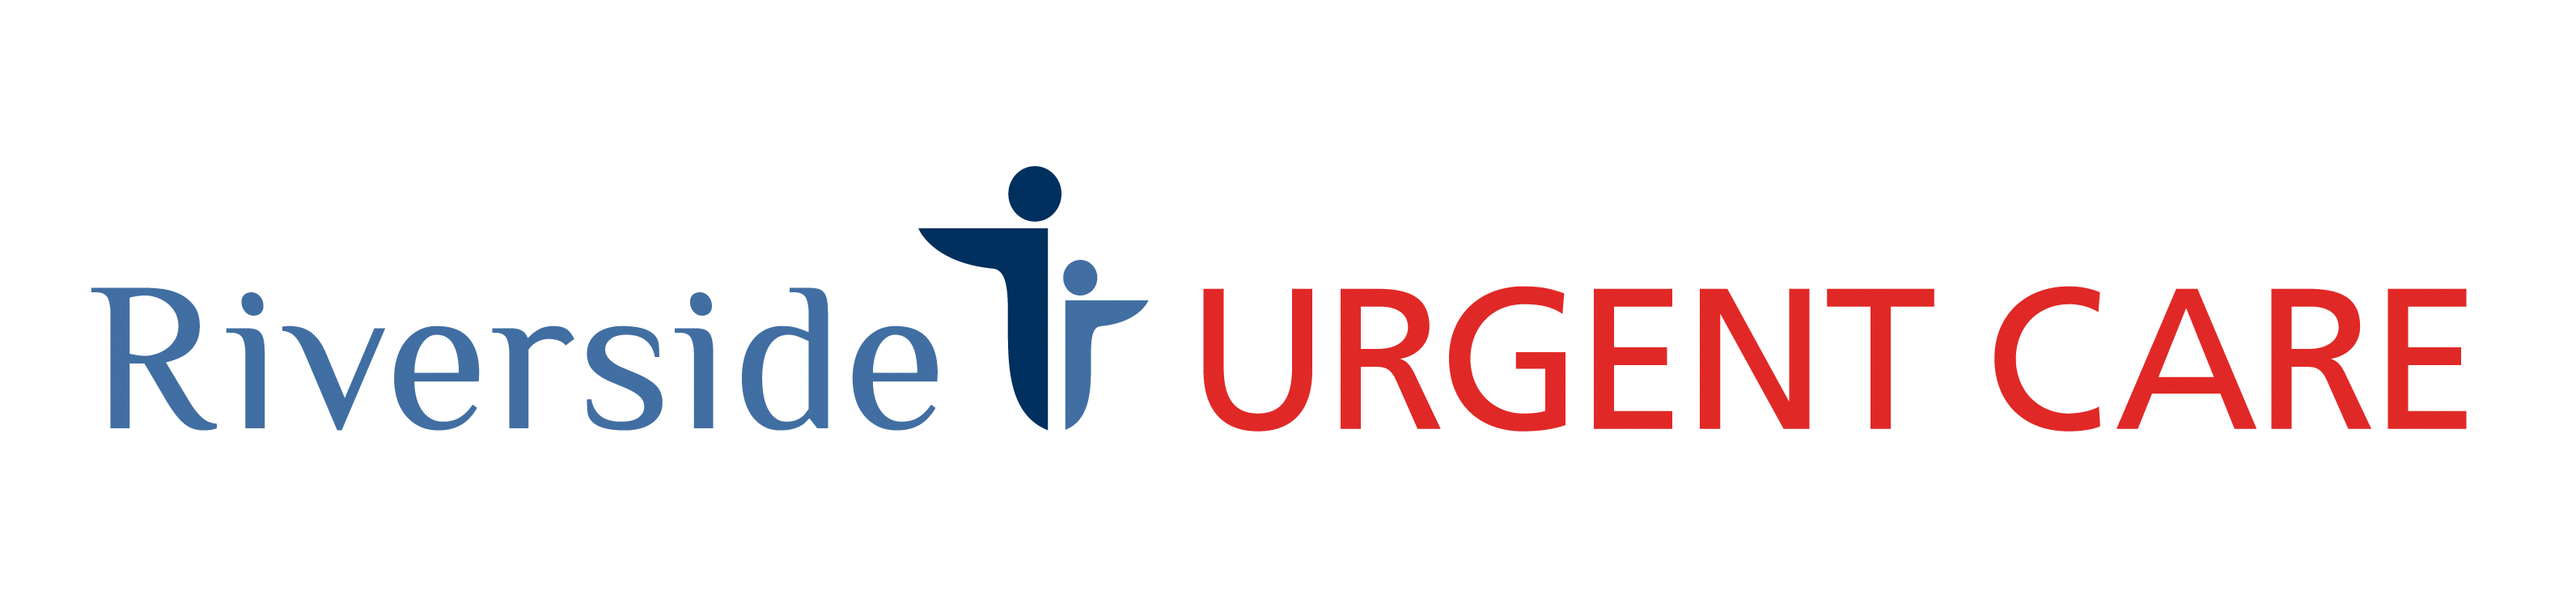 Riverside Urgent Care - Wall Logo